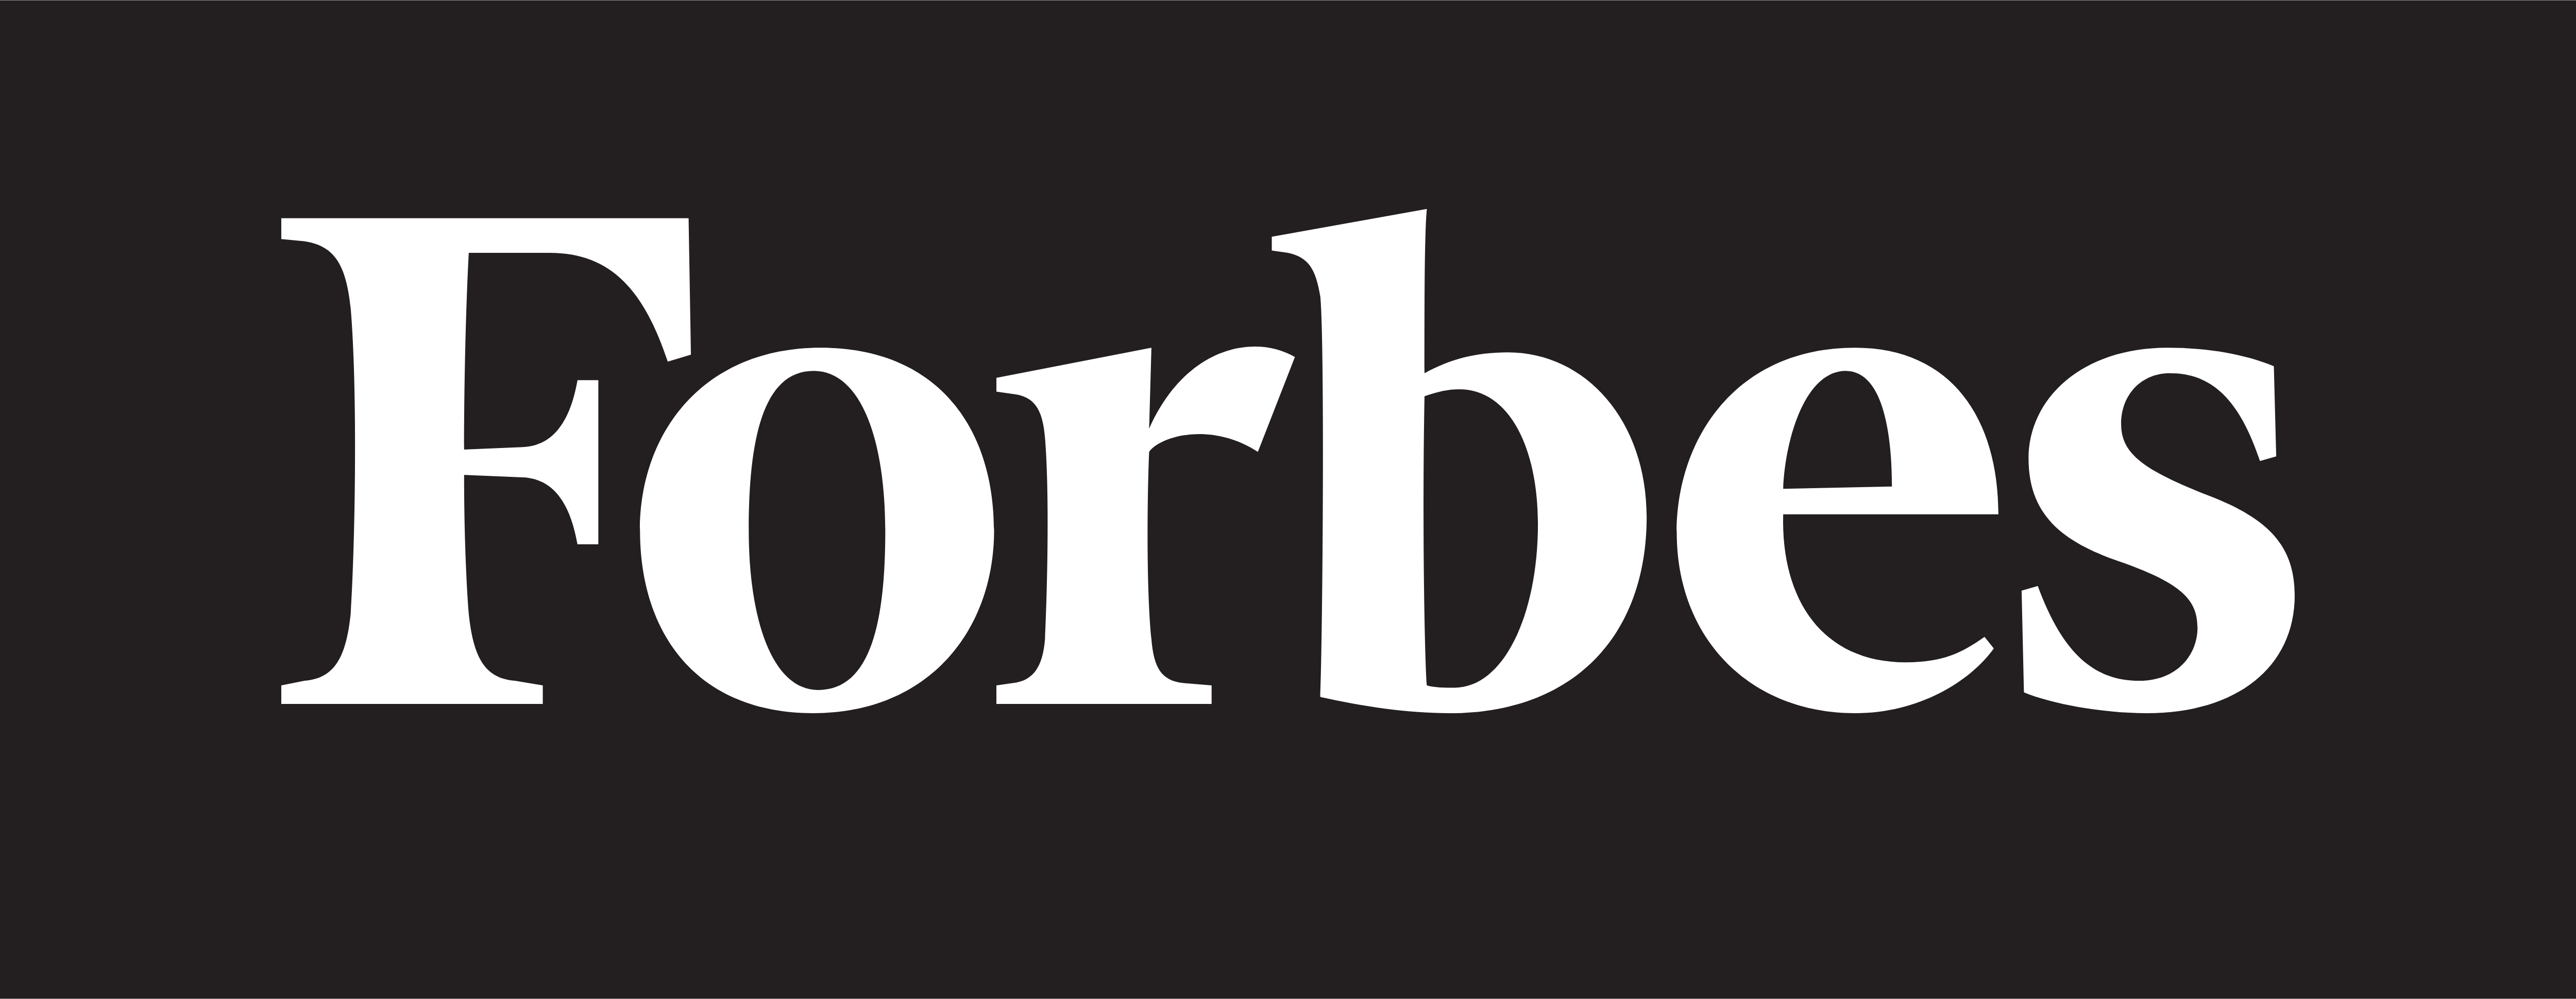 Forbes – Λήψη λογότυπων